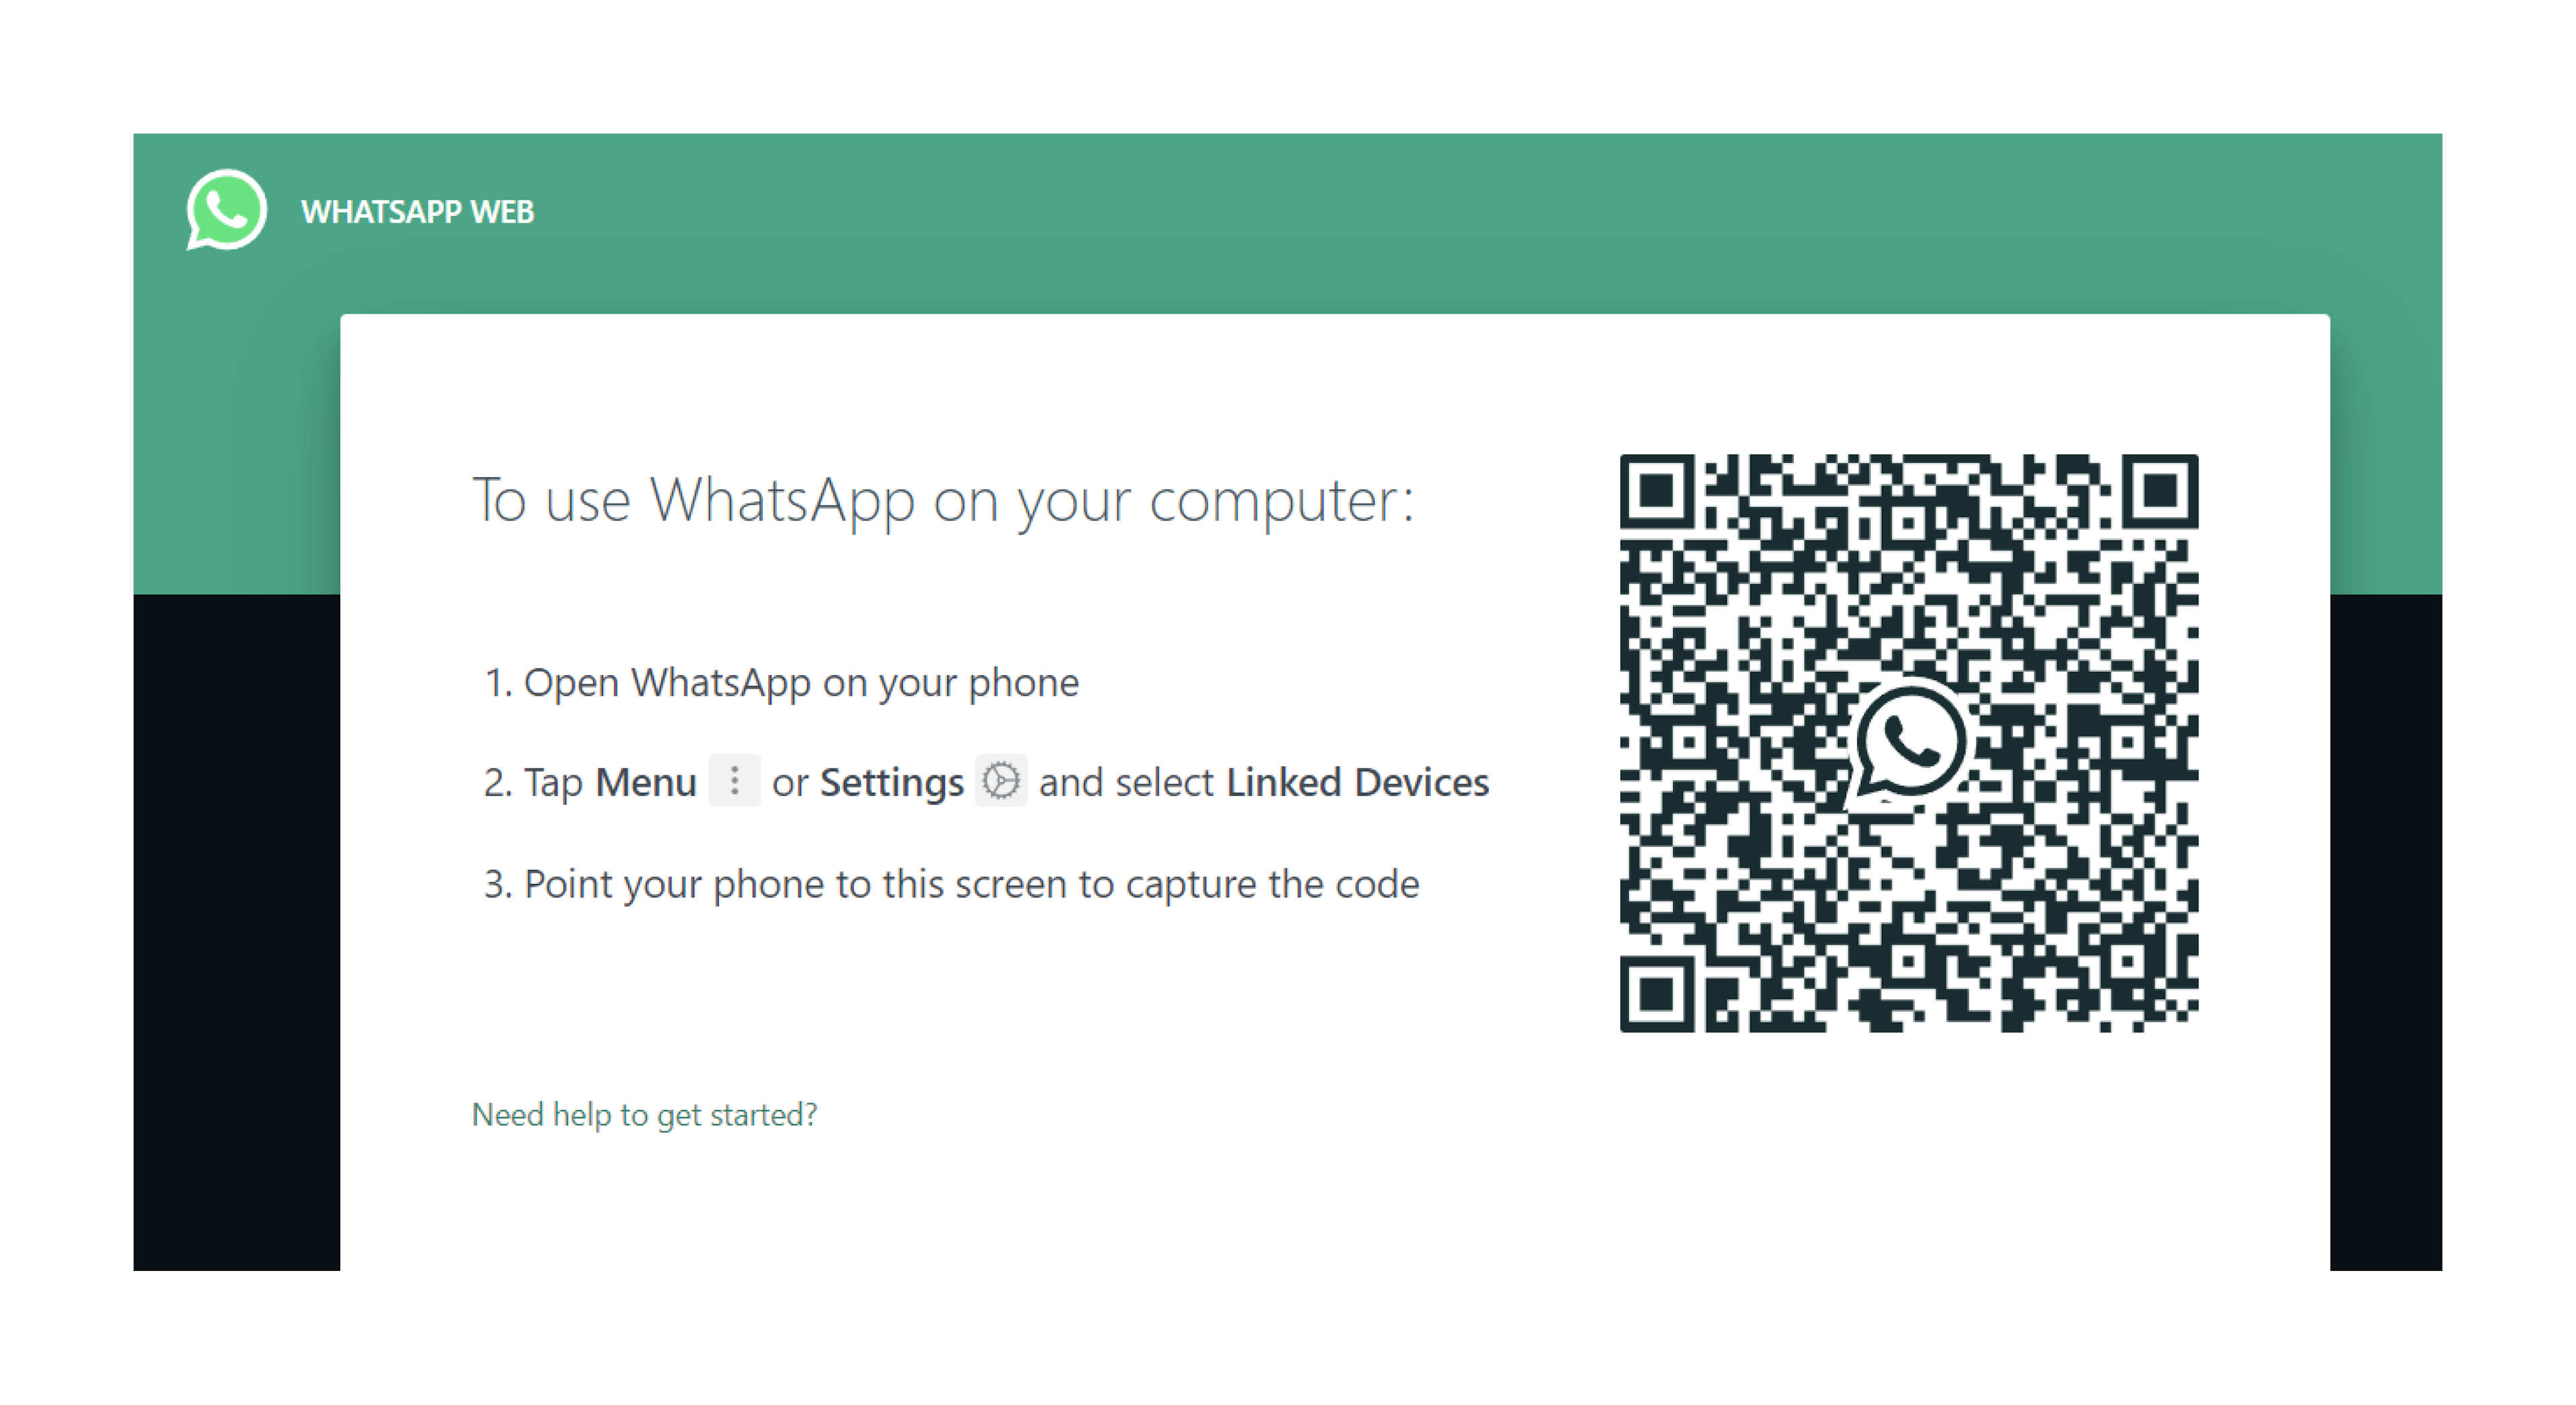 WhatsApp web login